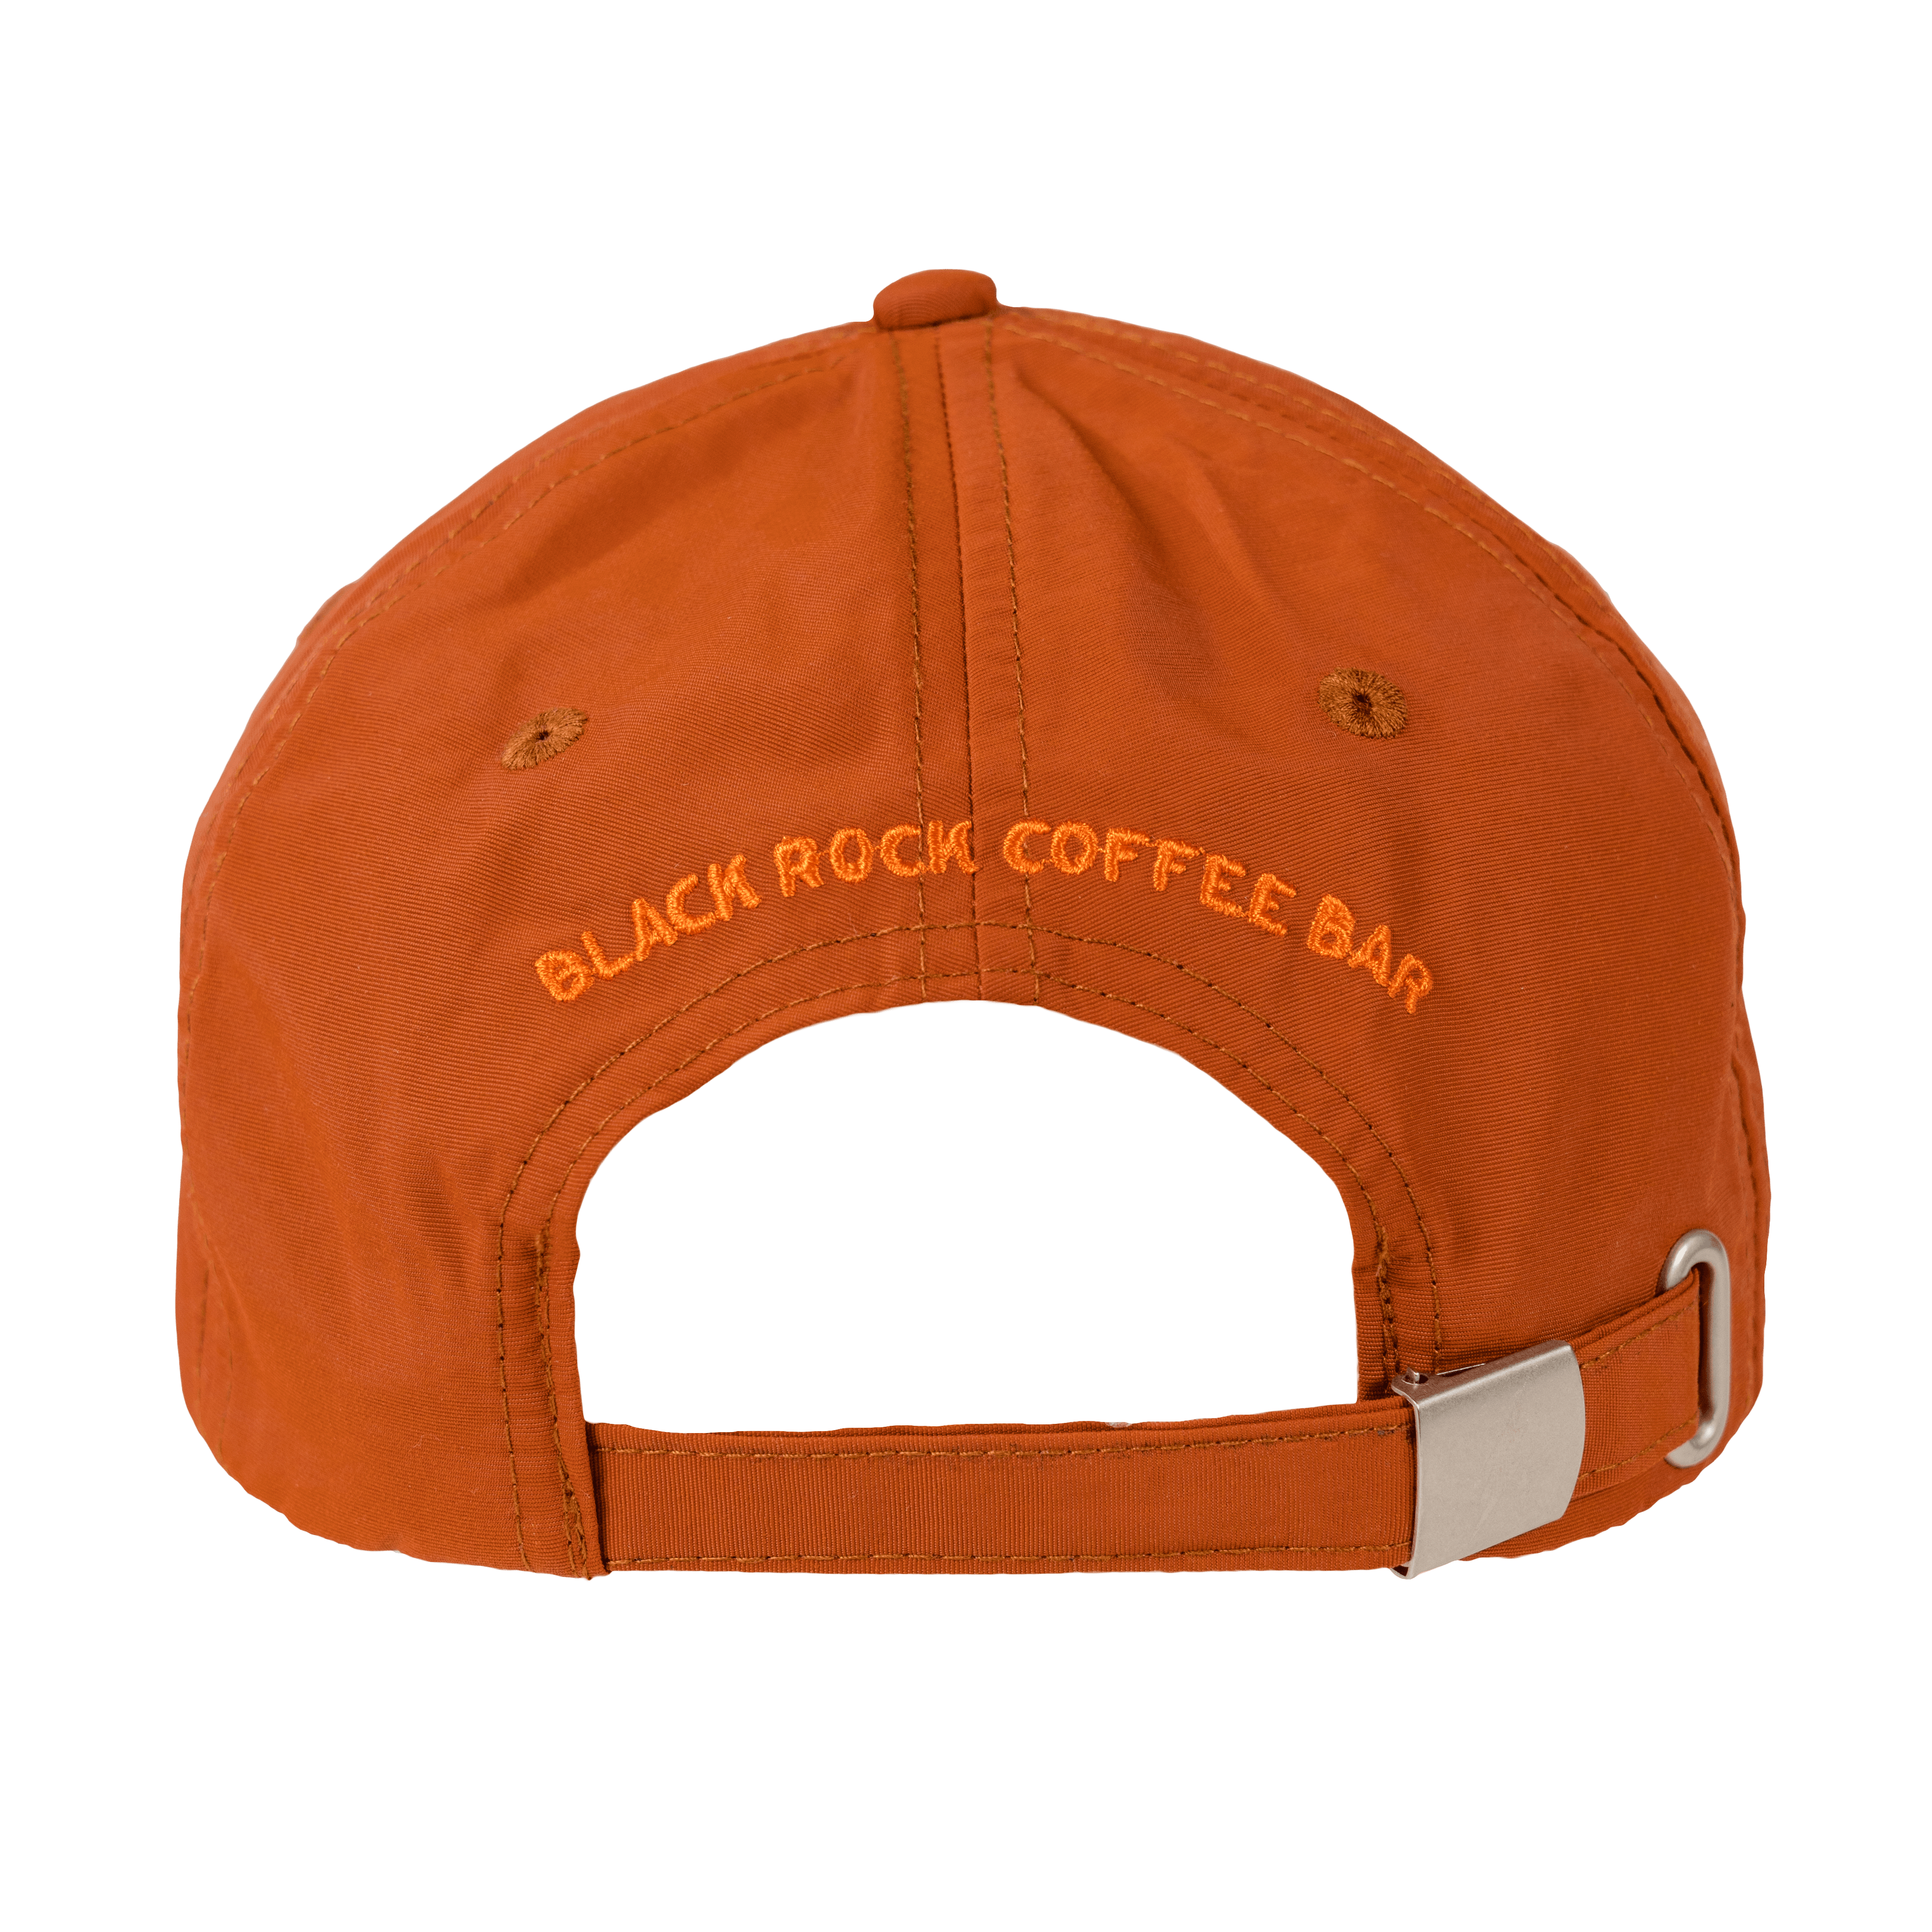 Shop Burnt Orange Nylon Baseball Cap Online - Black Rock Coffee